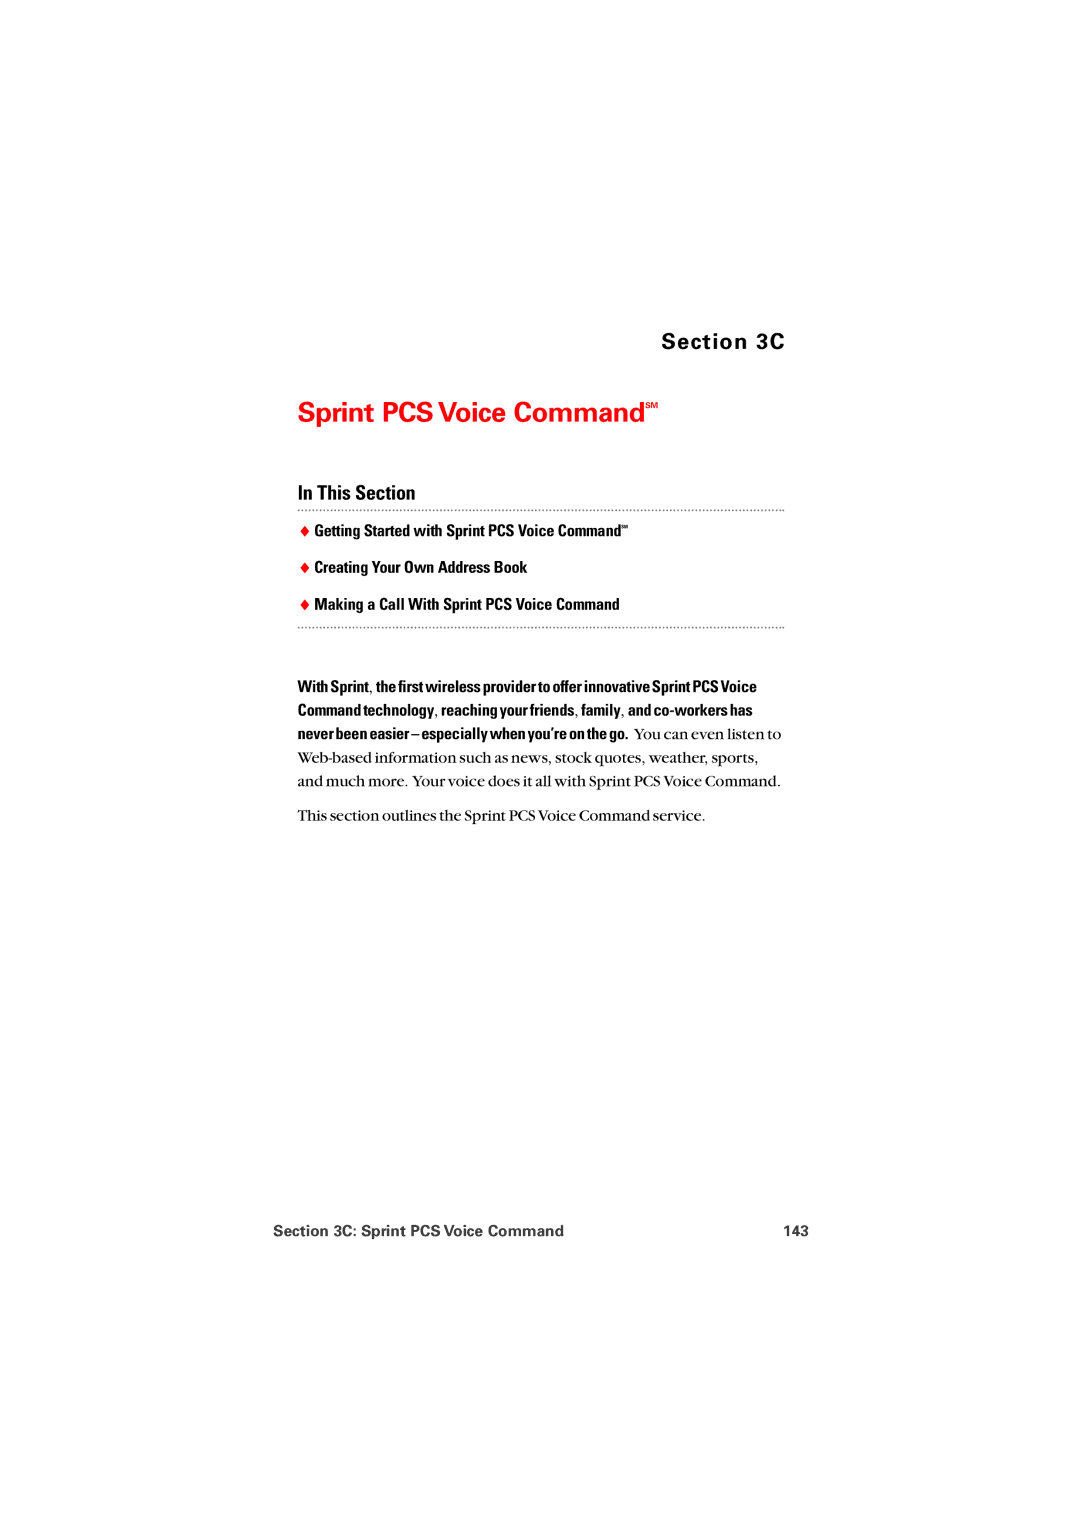 Sprint Nextel 8912 manual Sprint PCS Voice CommandSM, Sprint PCS Voice Command 143 